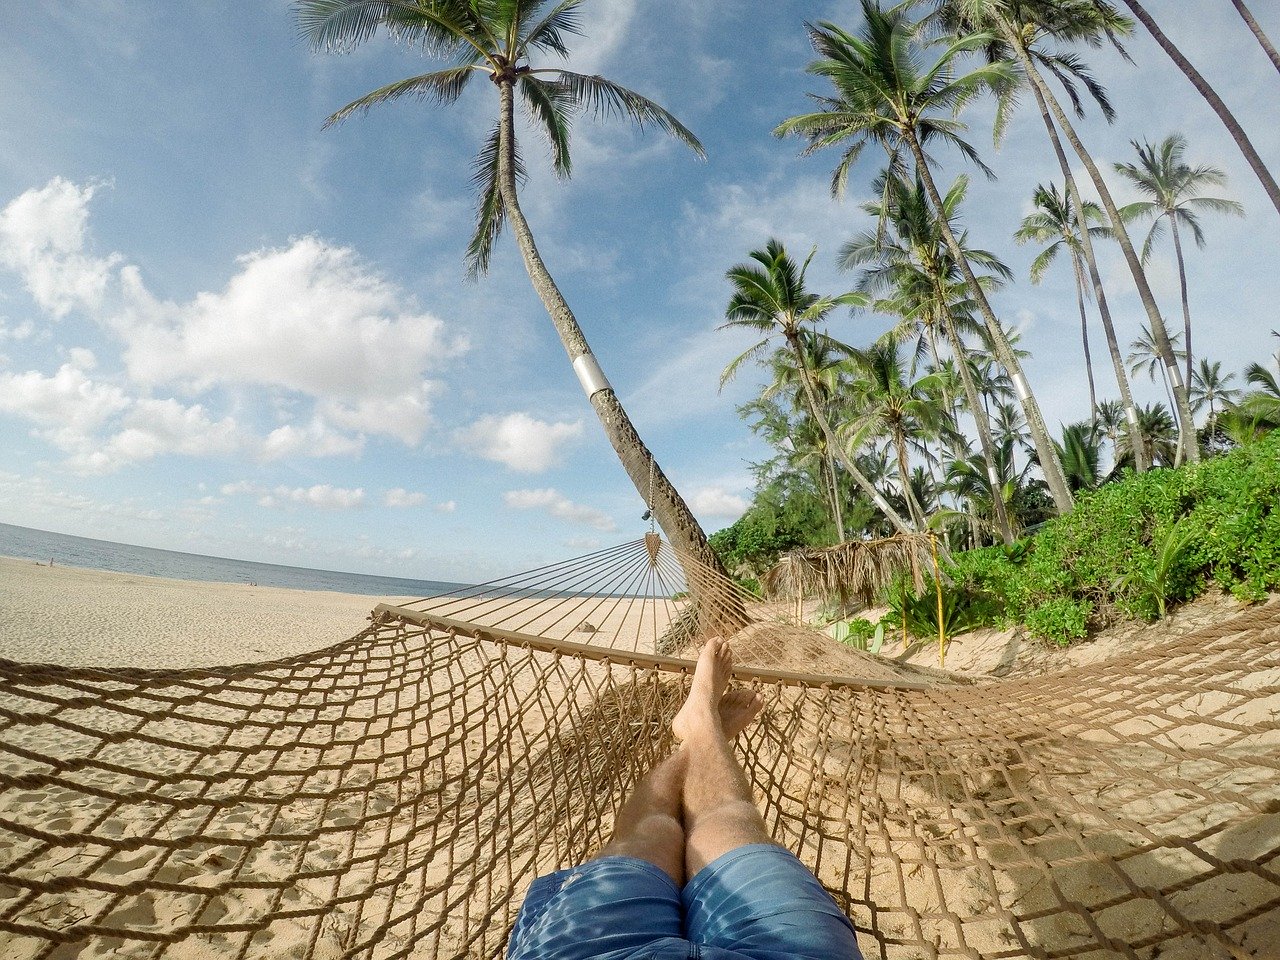 Siesta on a hammock at the beach